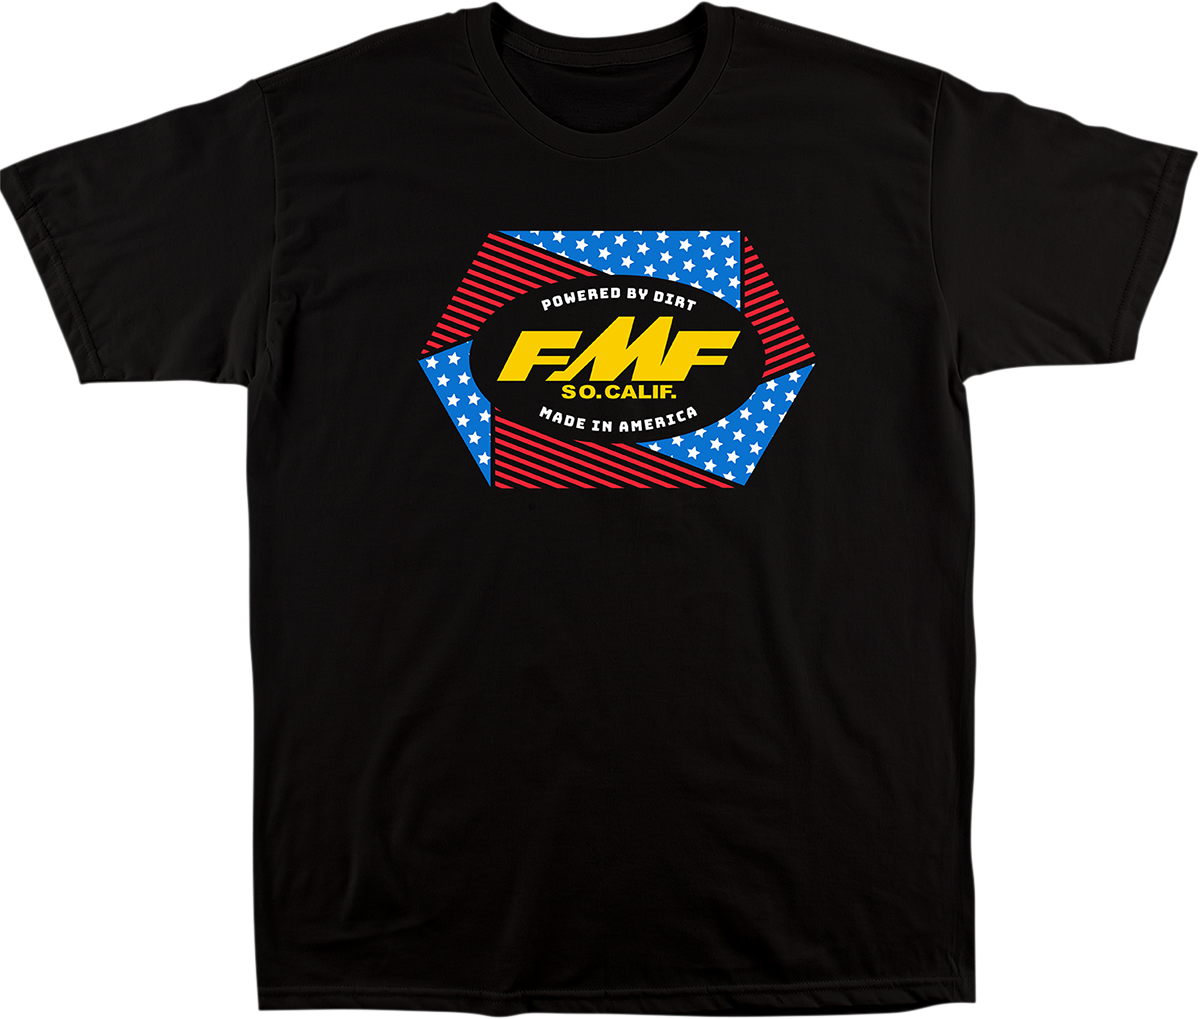 FMF Geometry T-Shirt - Black - Medium SU21118901BKMD 3030-20692